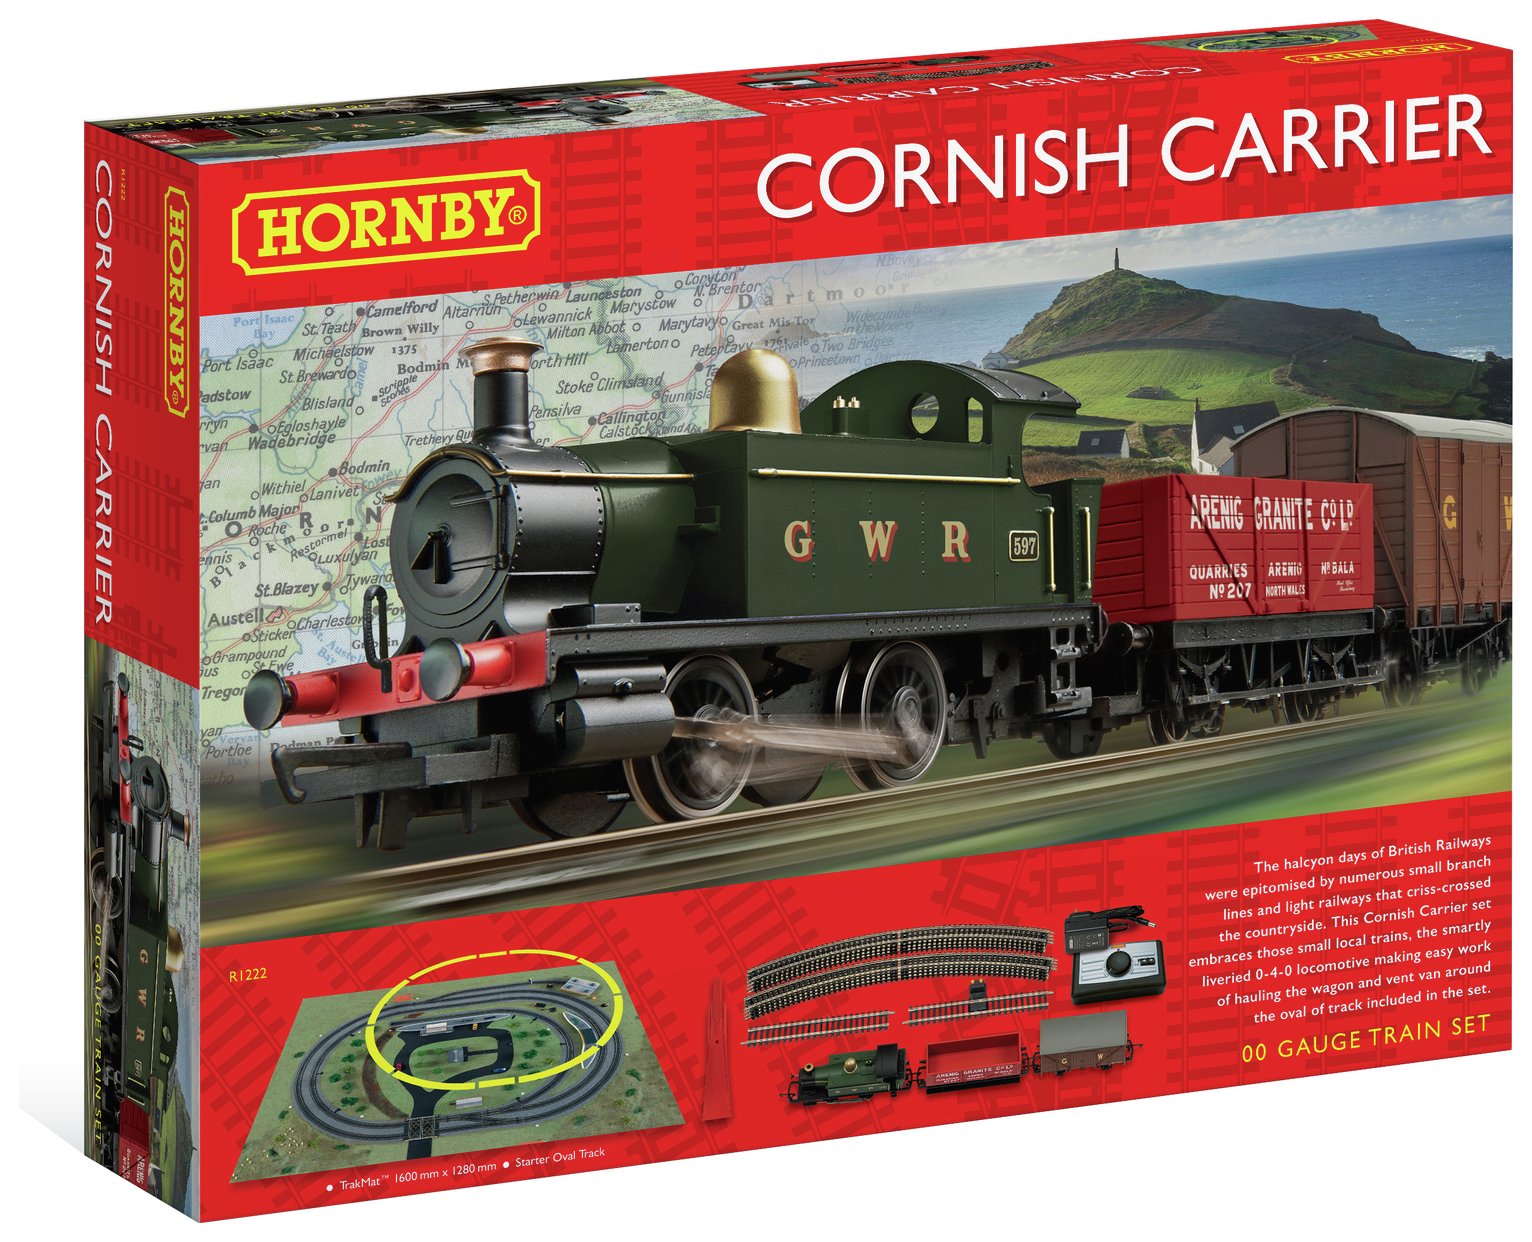 Hornby Hobbies Cornish Carrier Train Set Review